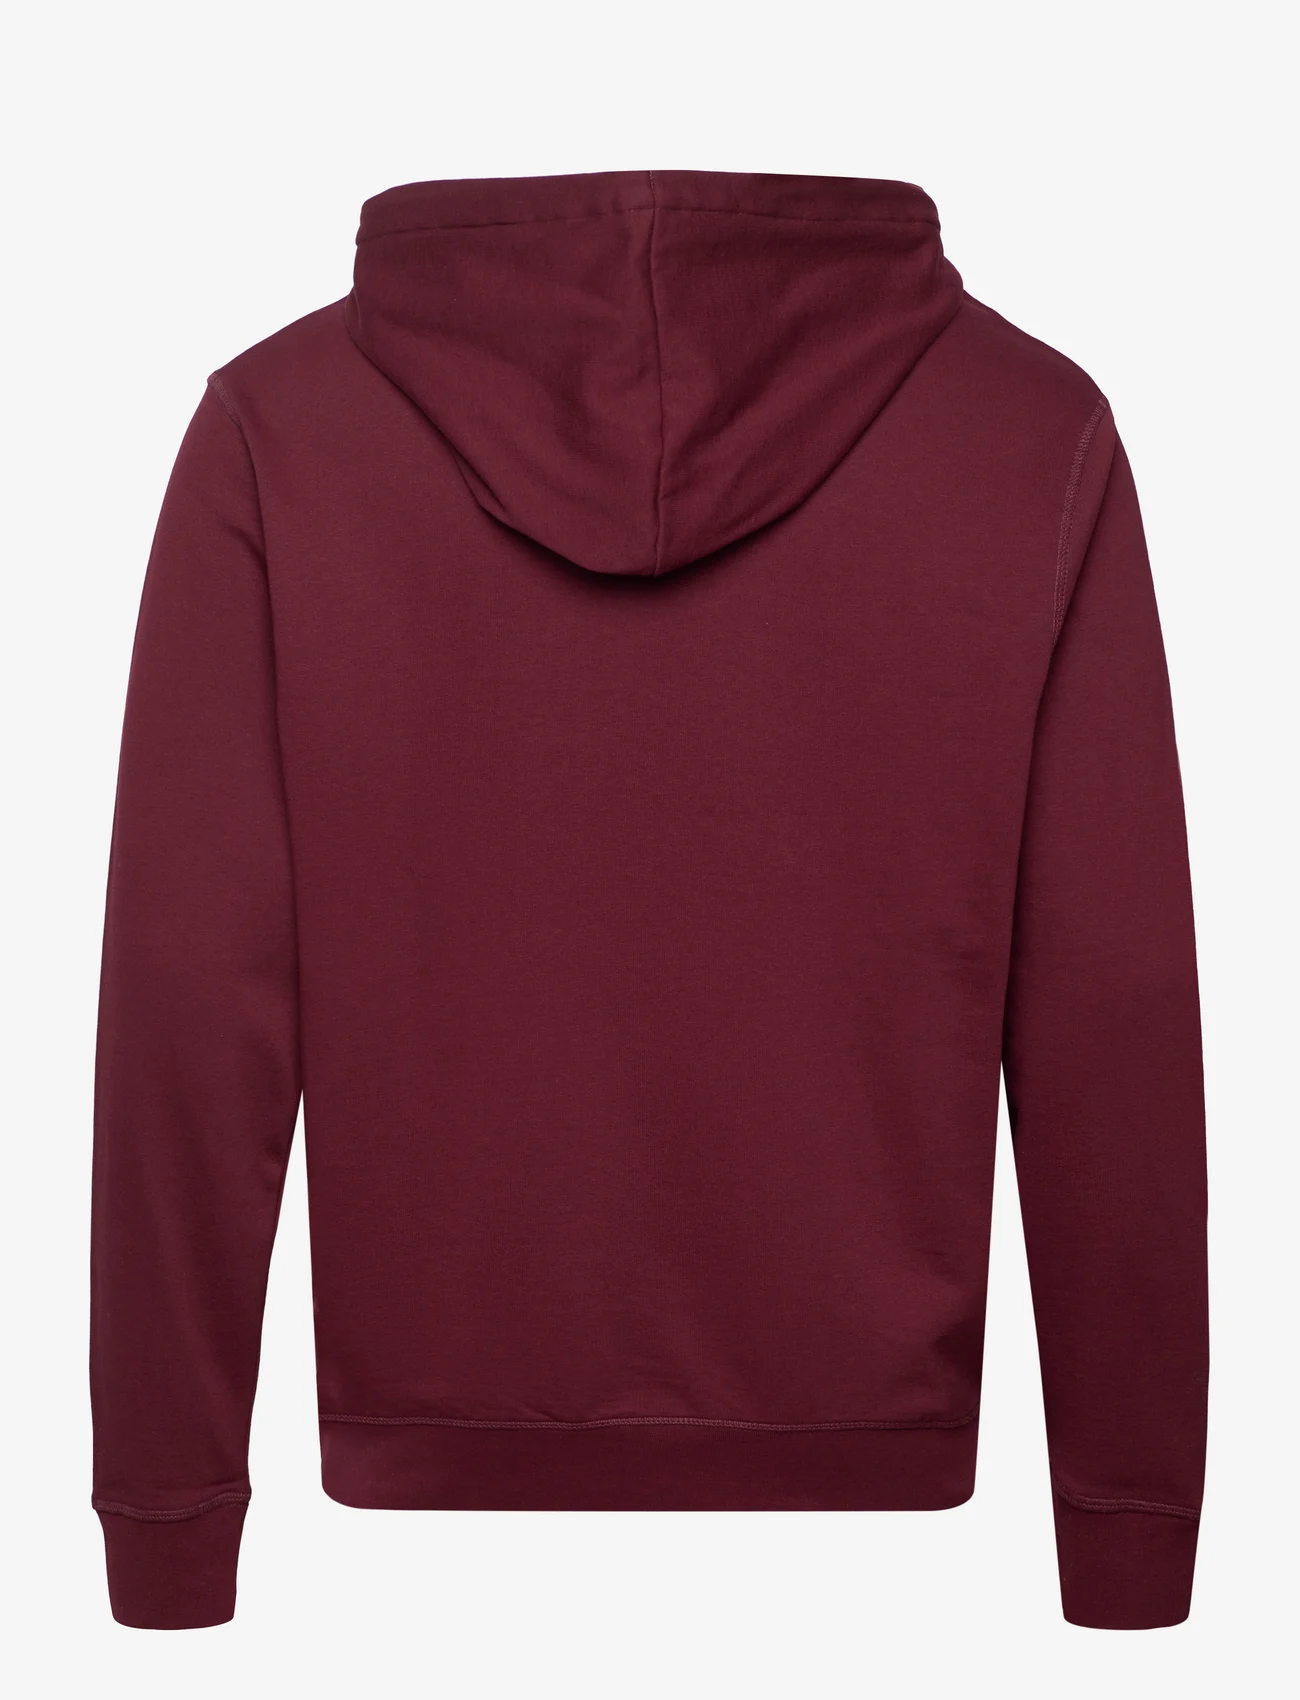 U.S. Polo Assn. - USPA Hood Sweater Elaf Men - hoodies - tawny port - 1